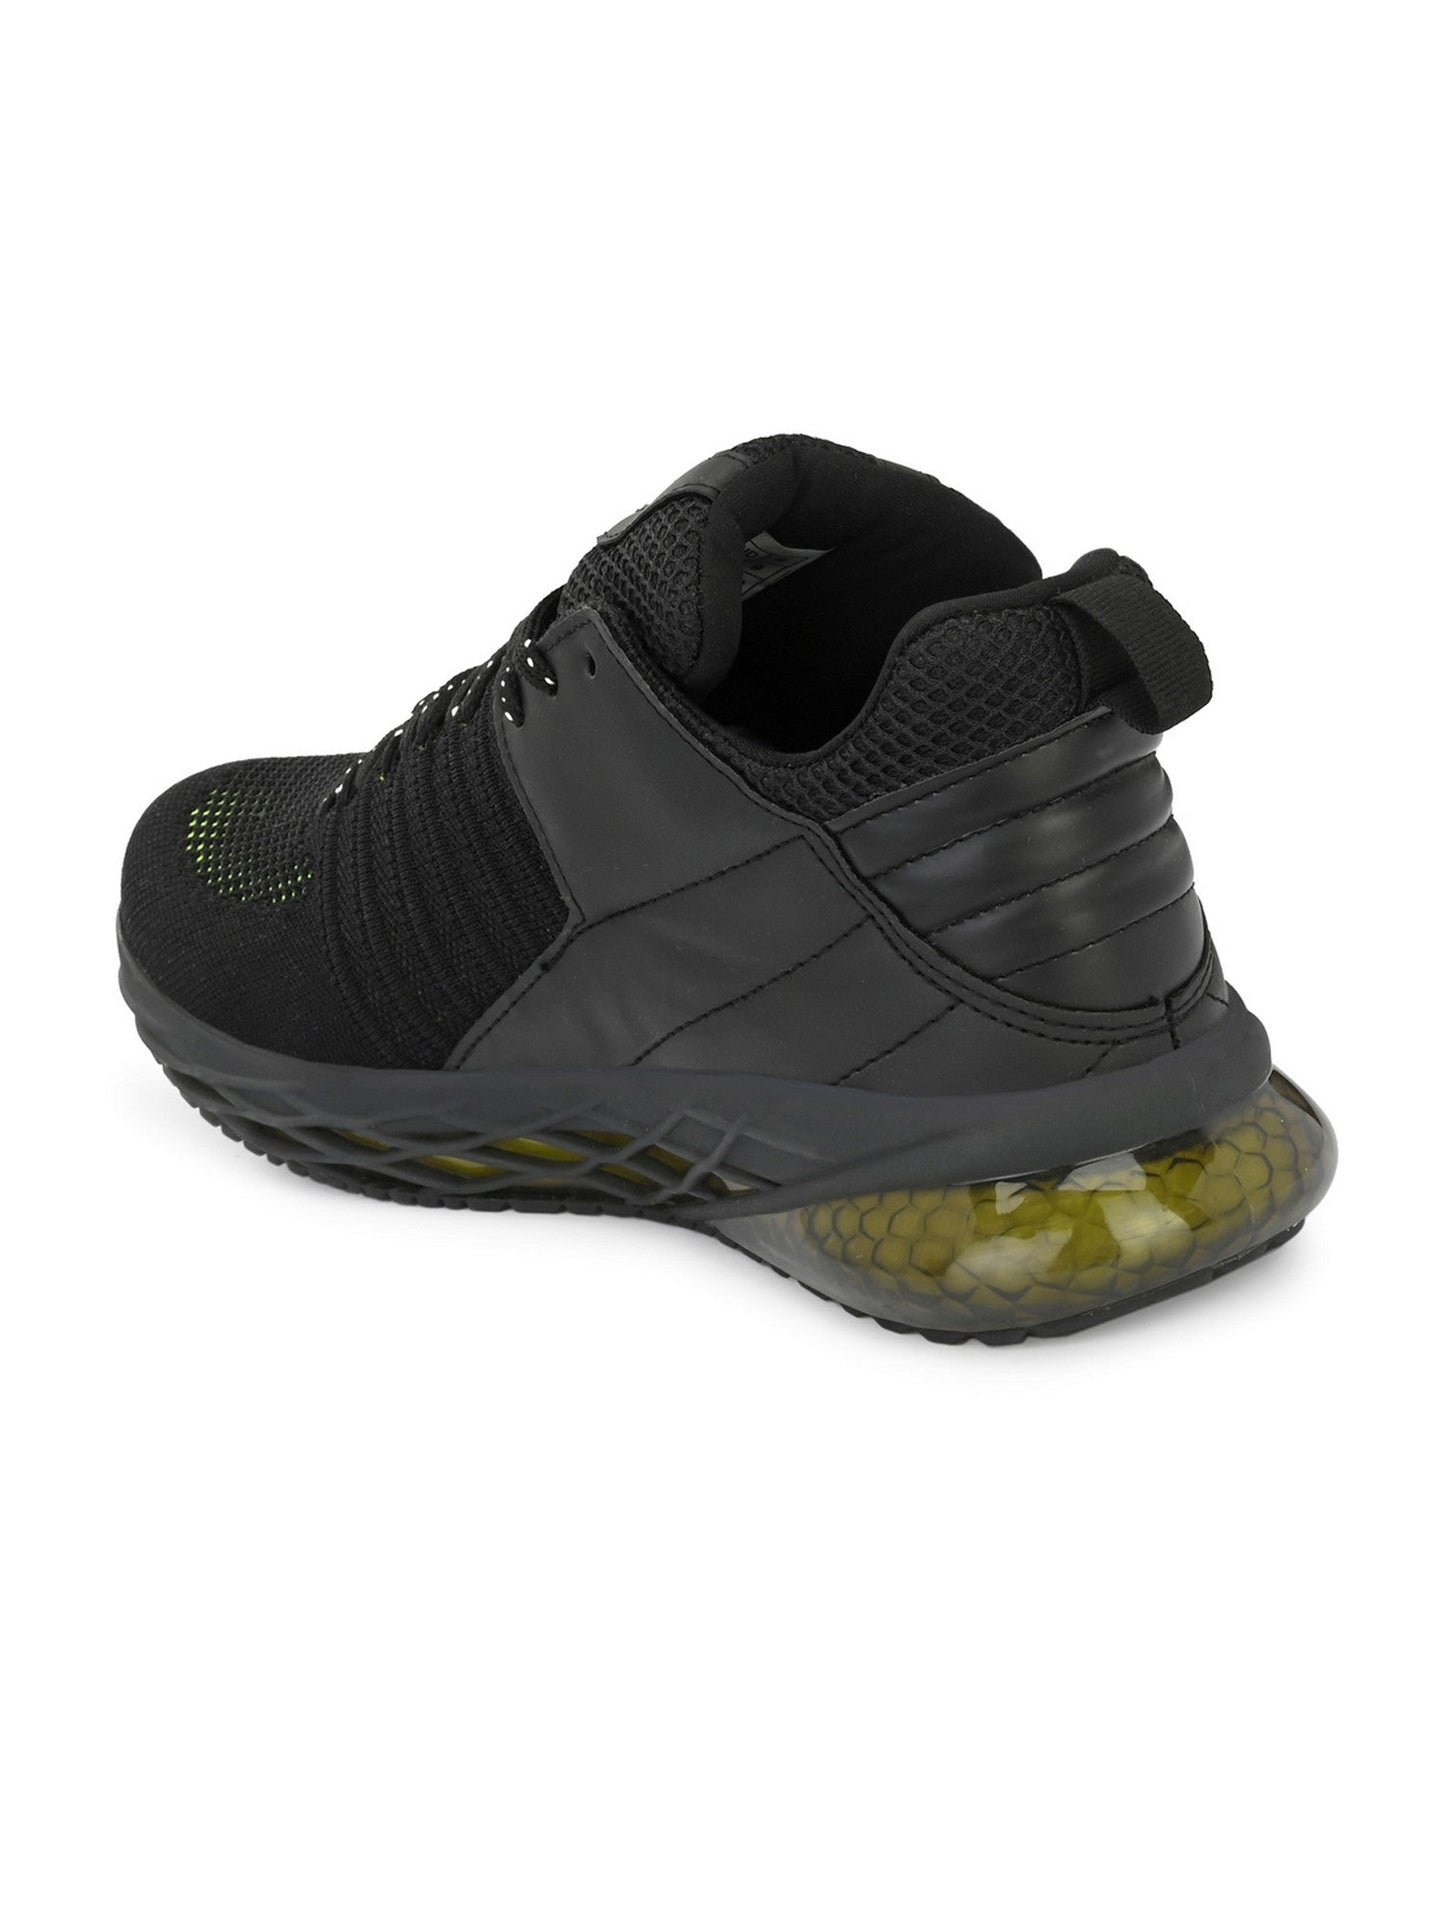 Hirolas® Men's Black/P.Green Elite Shock Absorbing Walking running Fitness Athletic Training Gym Ankle Fashion Lace Up Sport Shoes (HRLMP03BLK)